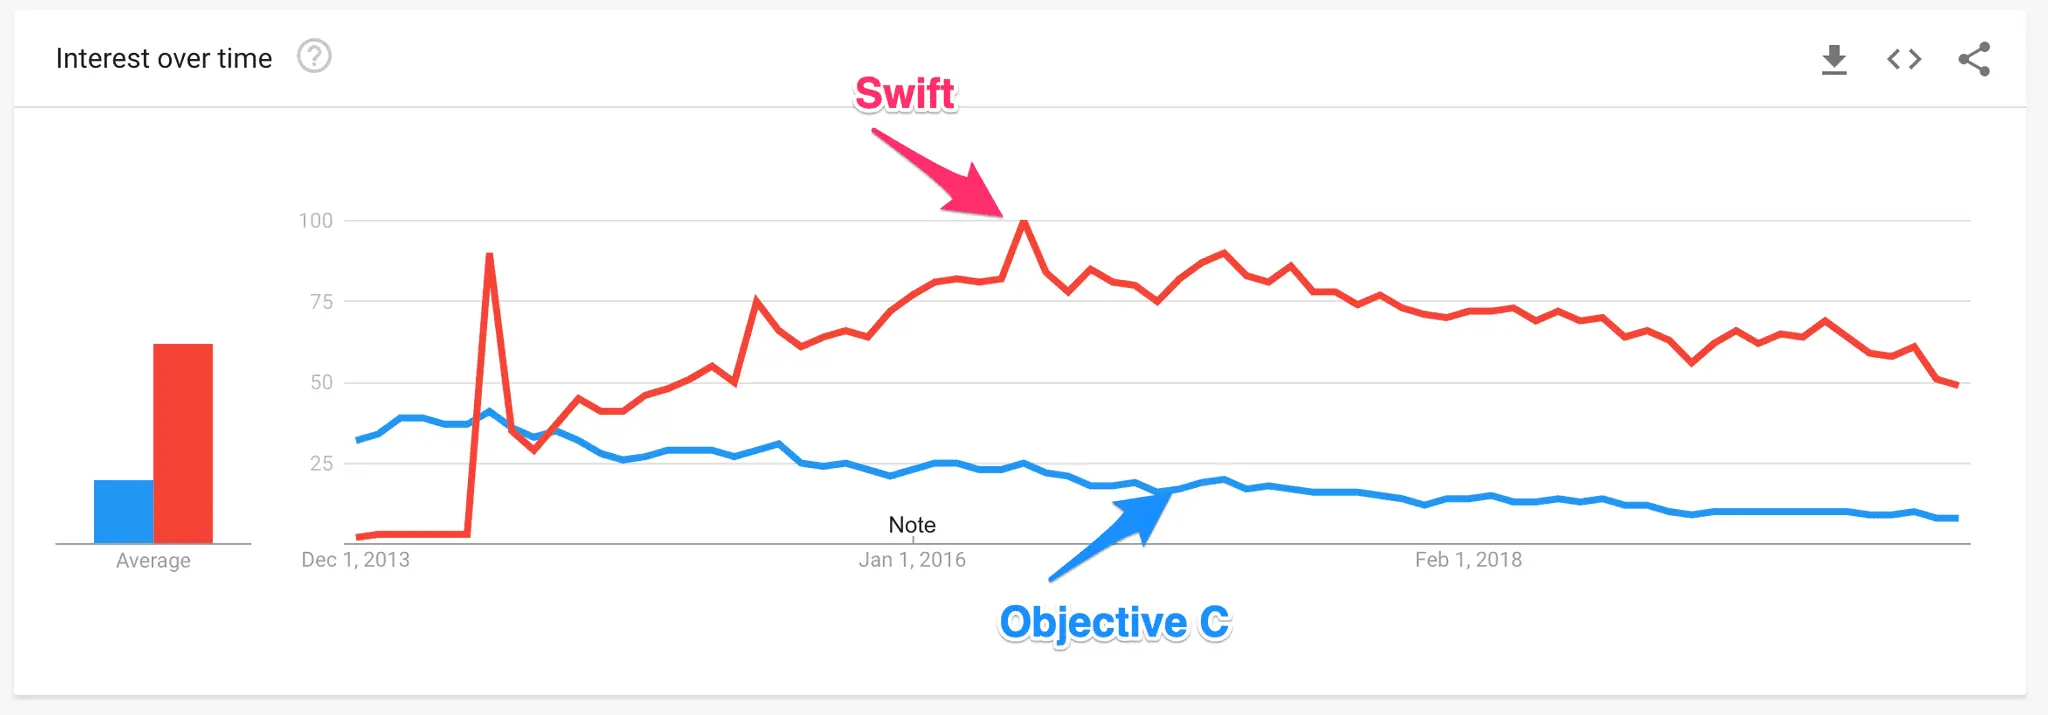 Google Trends Swift vs Objective C